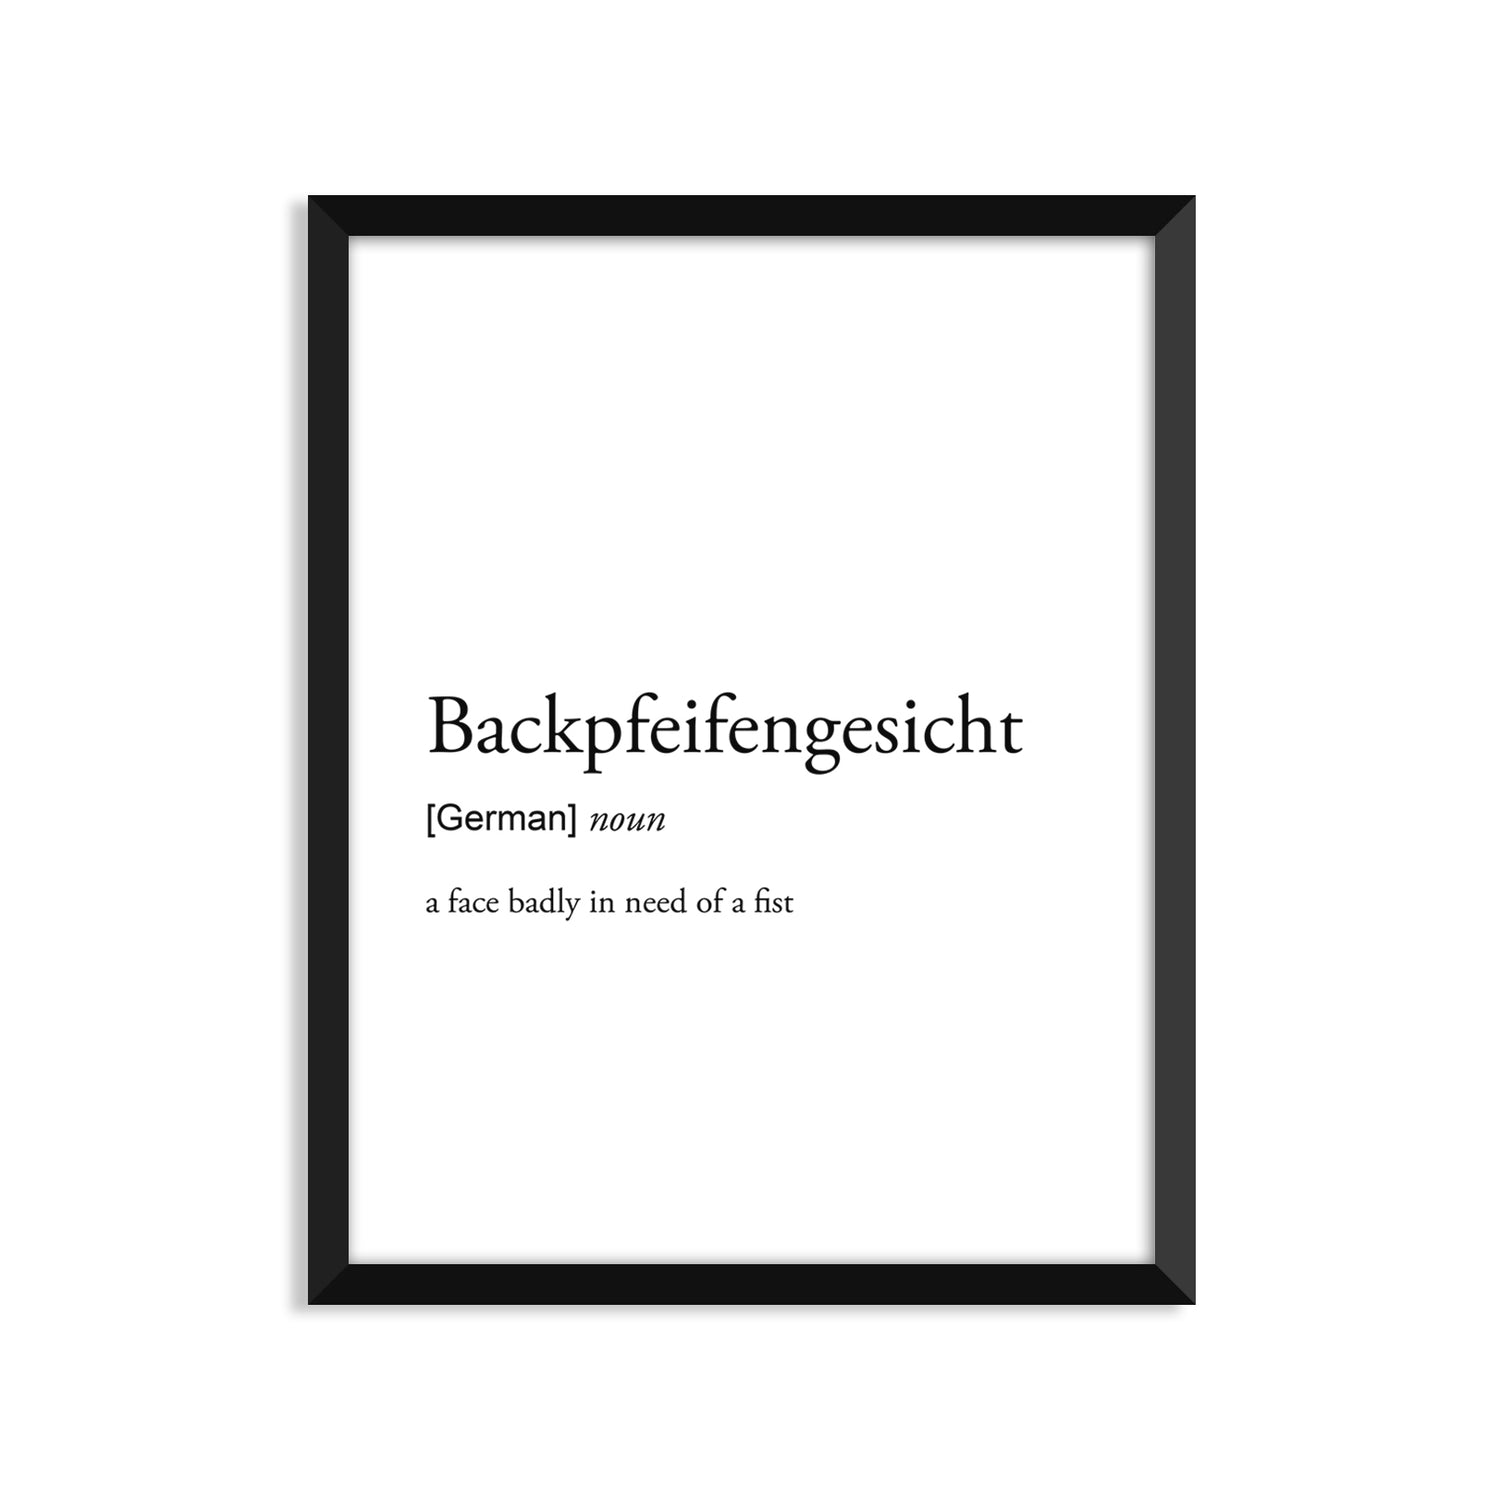 Backpfeifengesicht Definition - Unframed Art Print Or Greeting Card